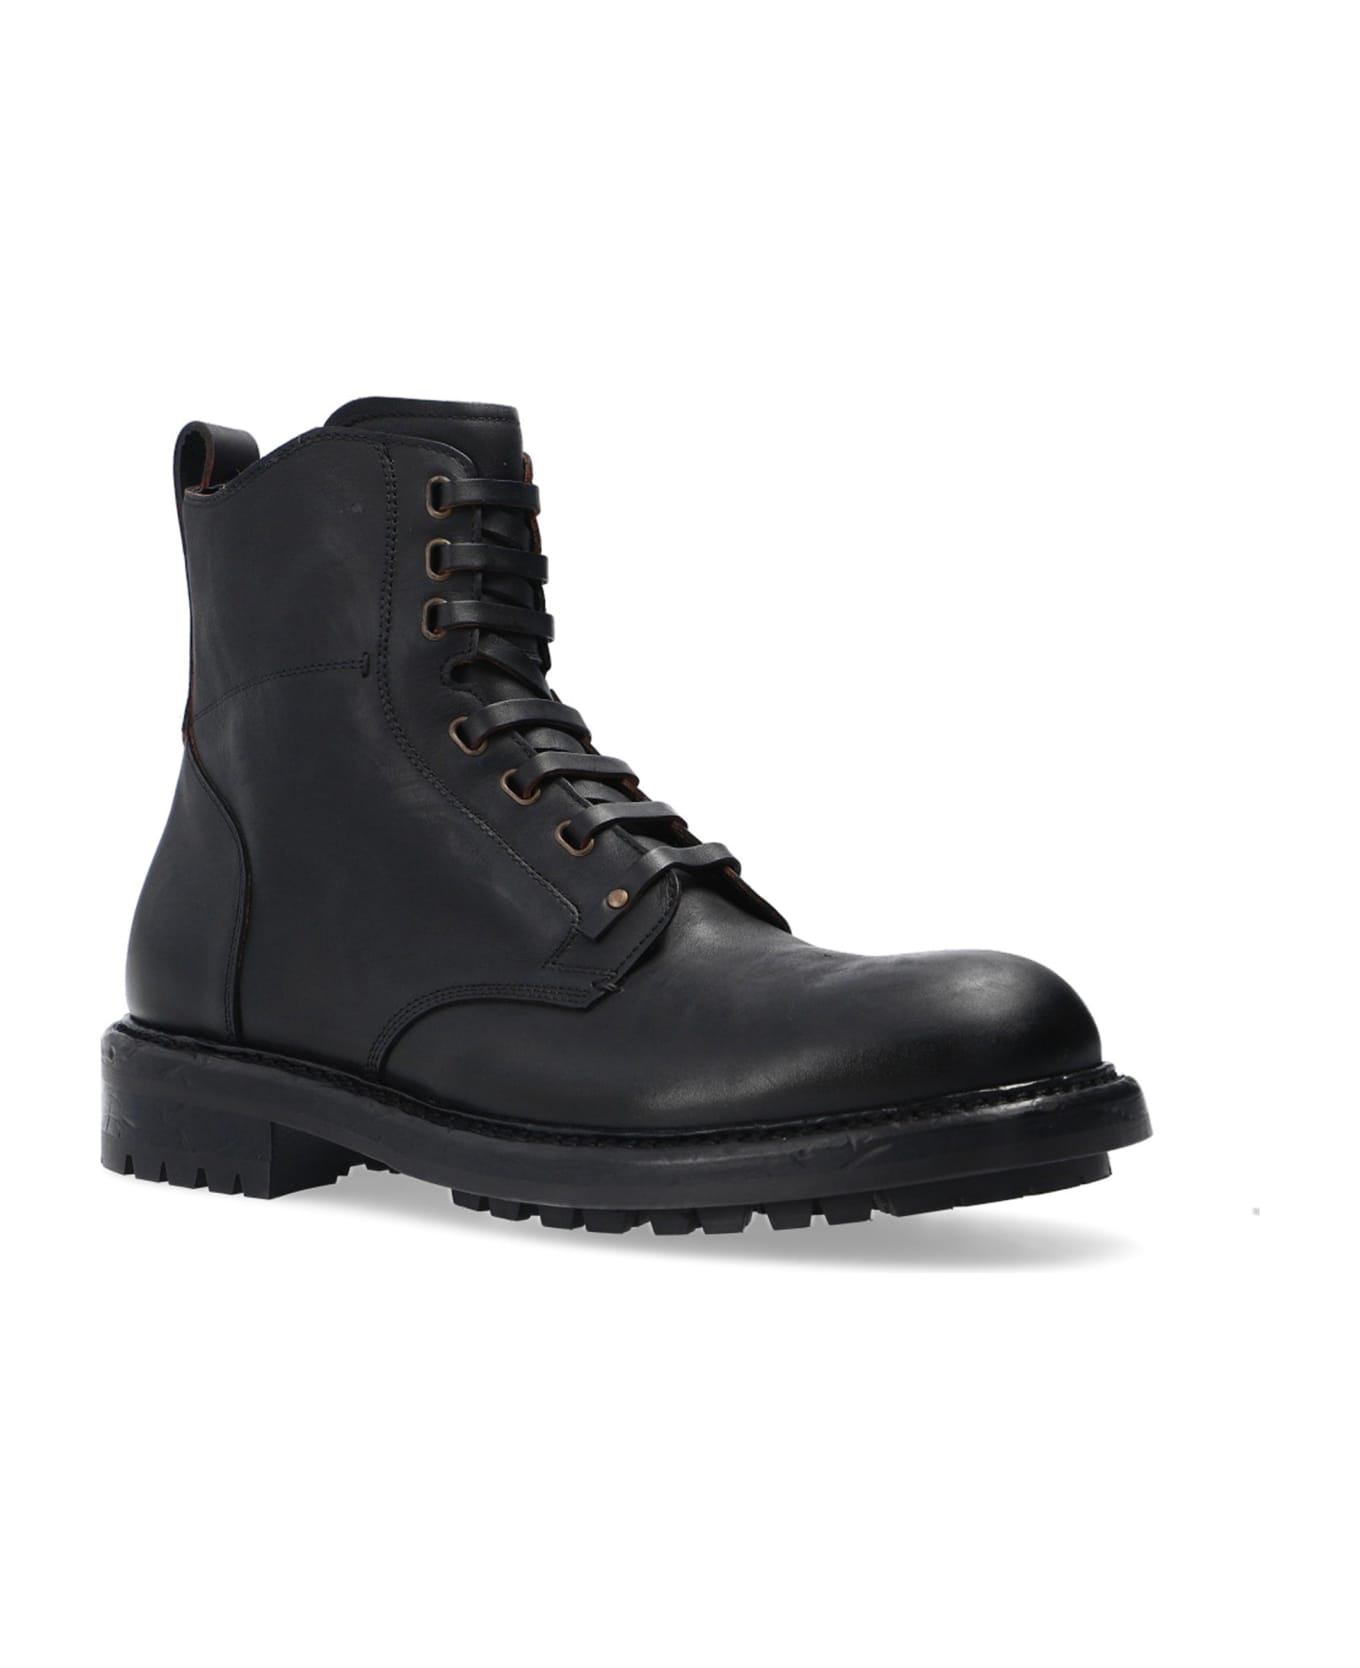 Dolce & Gabbana Leather Boots - Black ブーツ